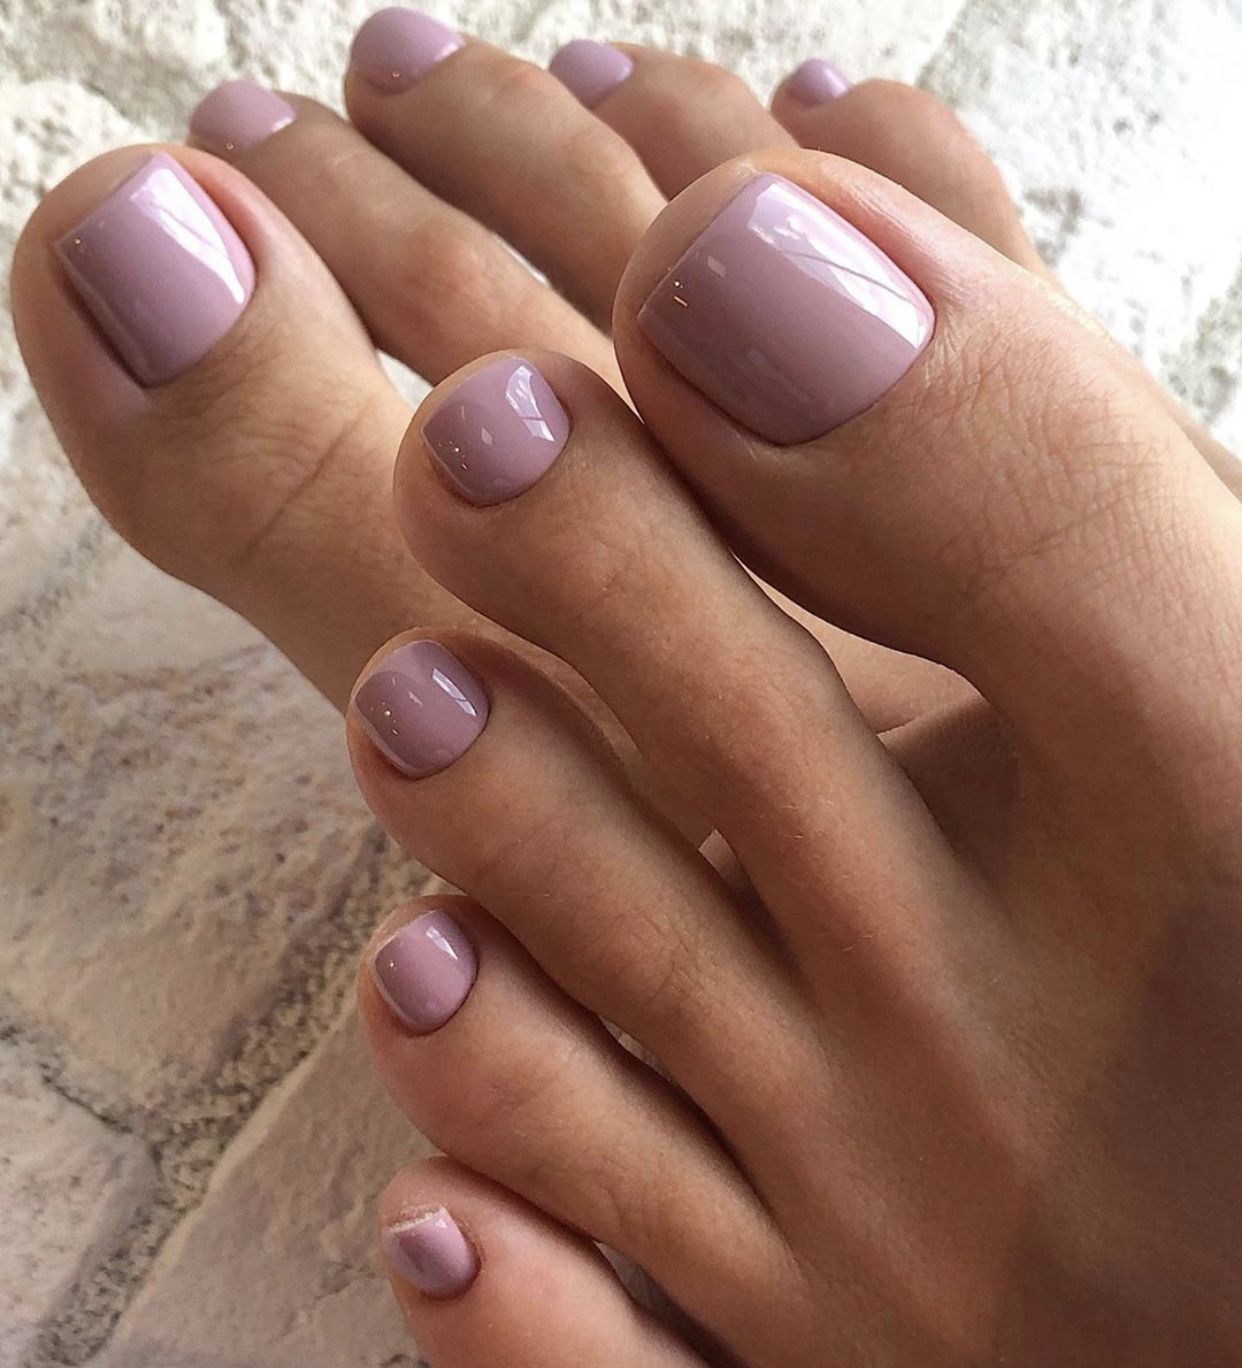 Pin By Judita Nagyvathy On Pedicure Pretty Toe Nails Gel Toe Nails Acrylic Toe Nails